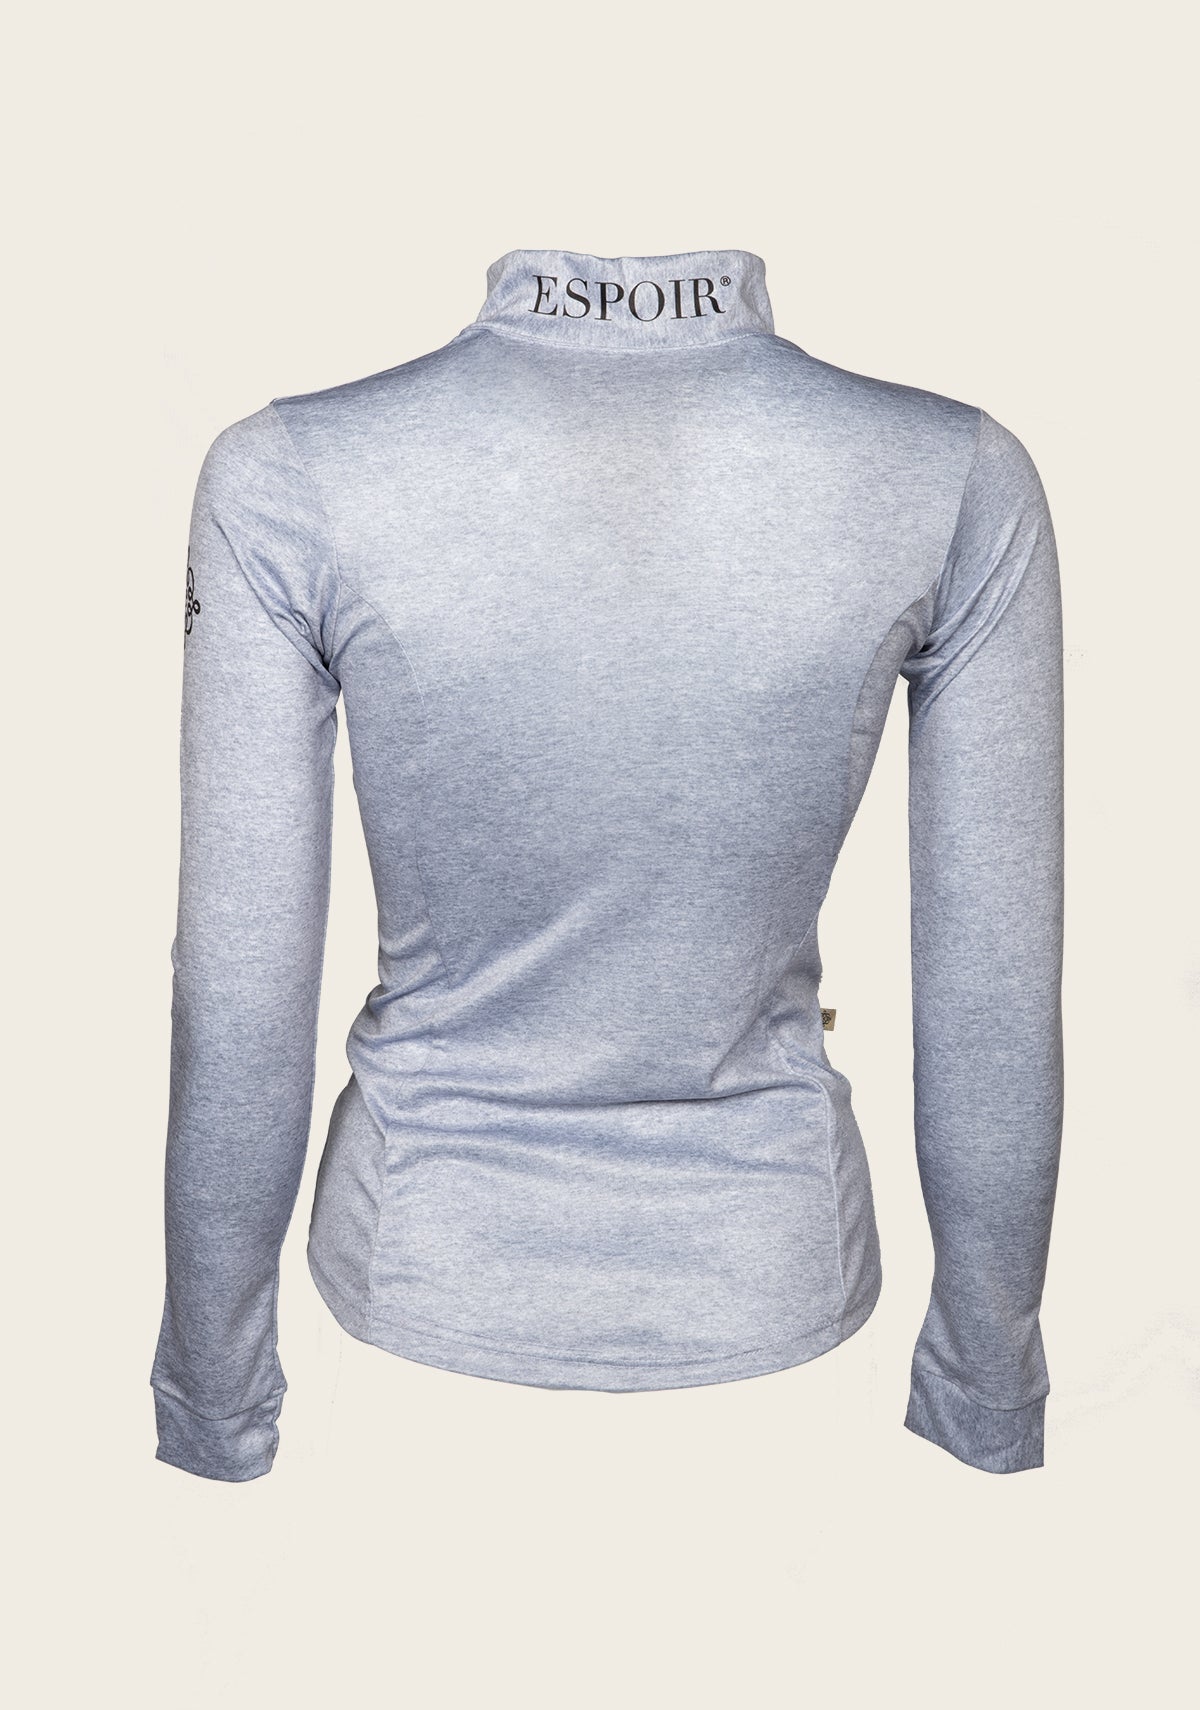 SALE Espoir Lumiere Eternal Collection Melange Grey Quarter Zip Sun Shirt